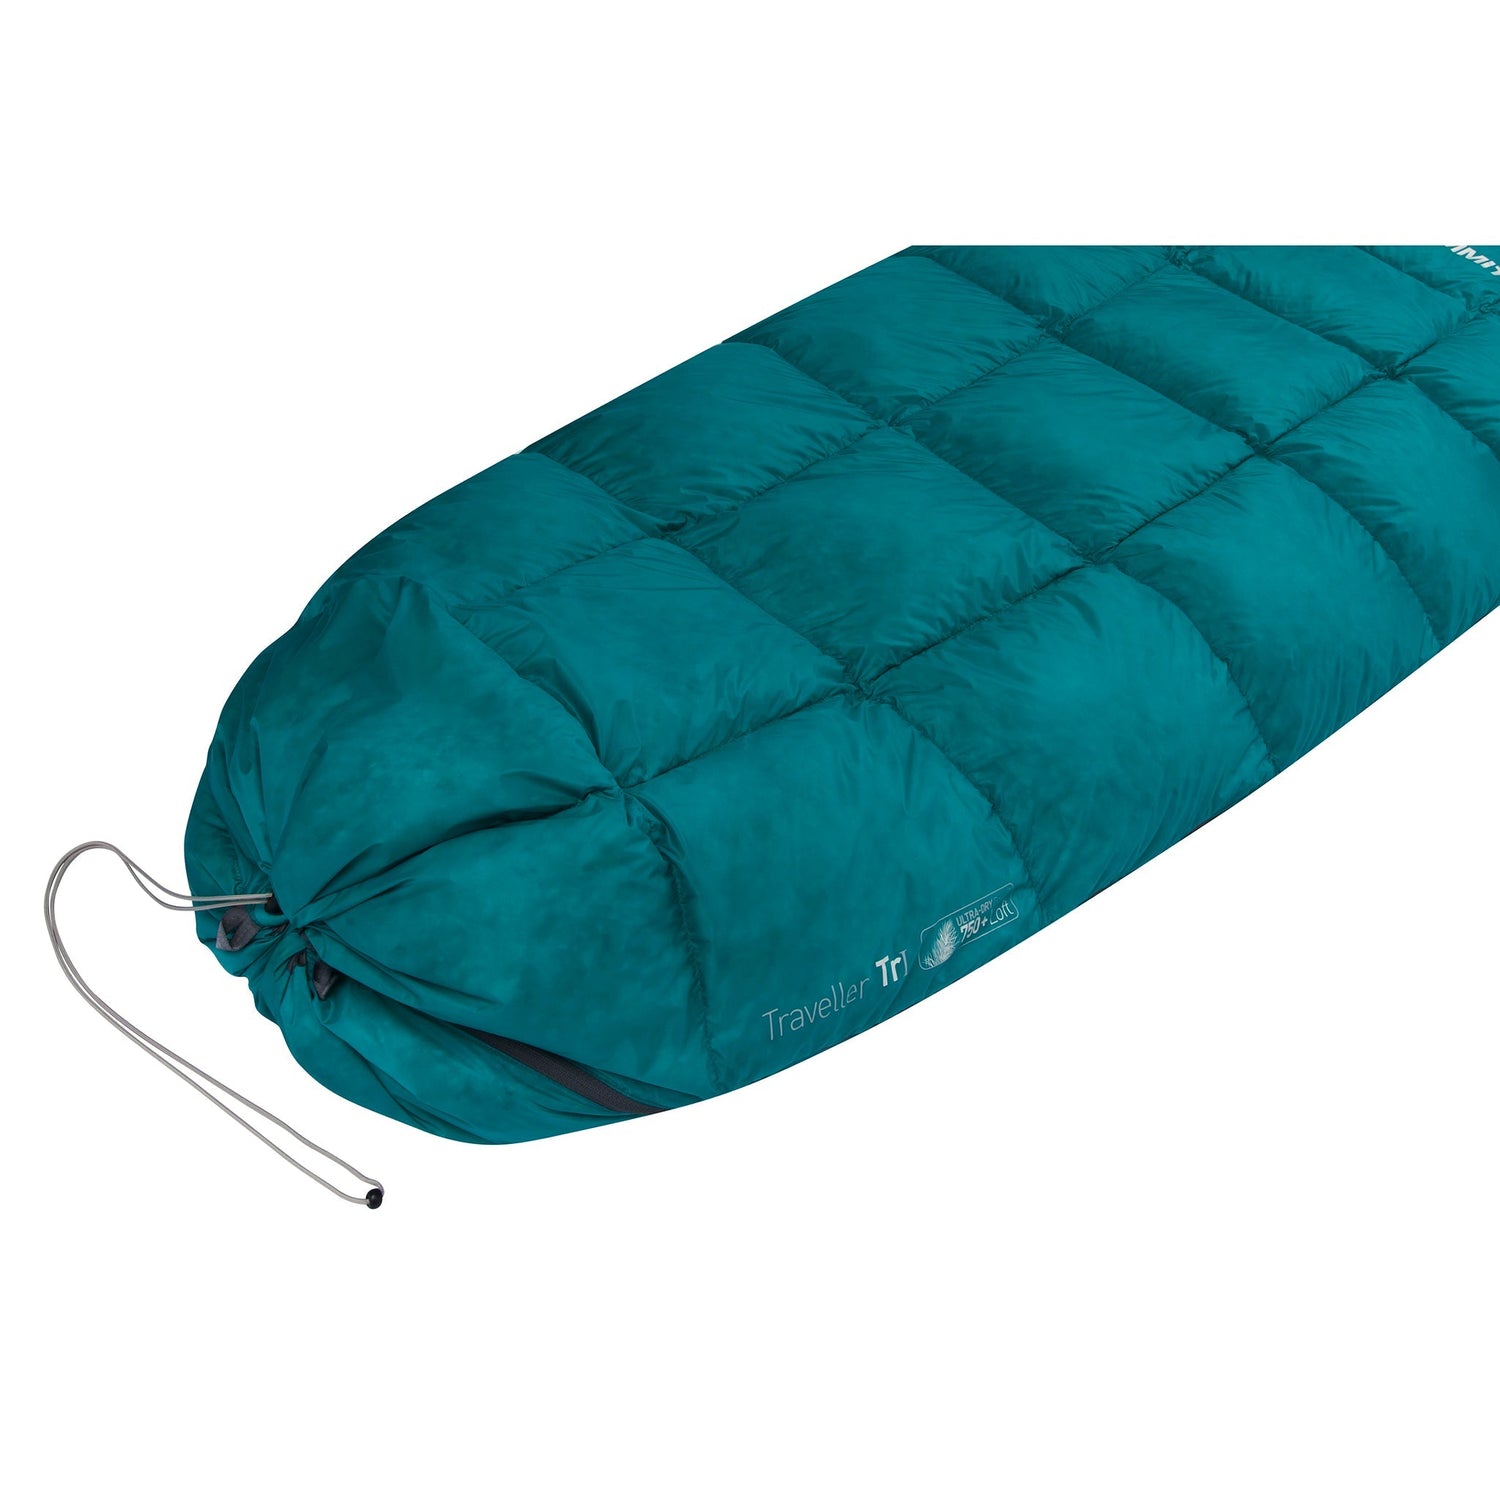 Traveller Sleeping Bag & Blanket (10°C & -1°C)